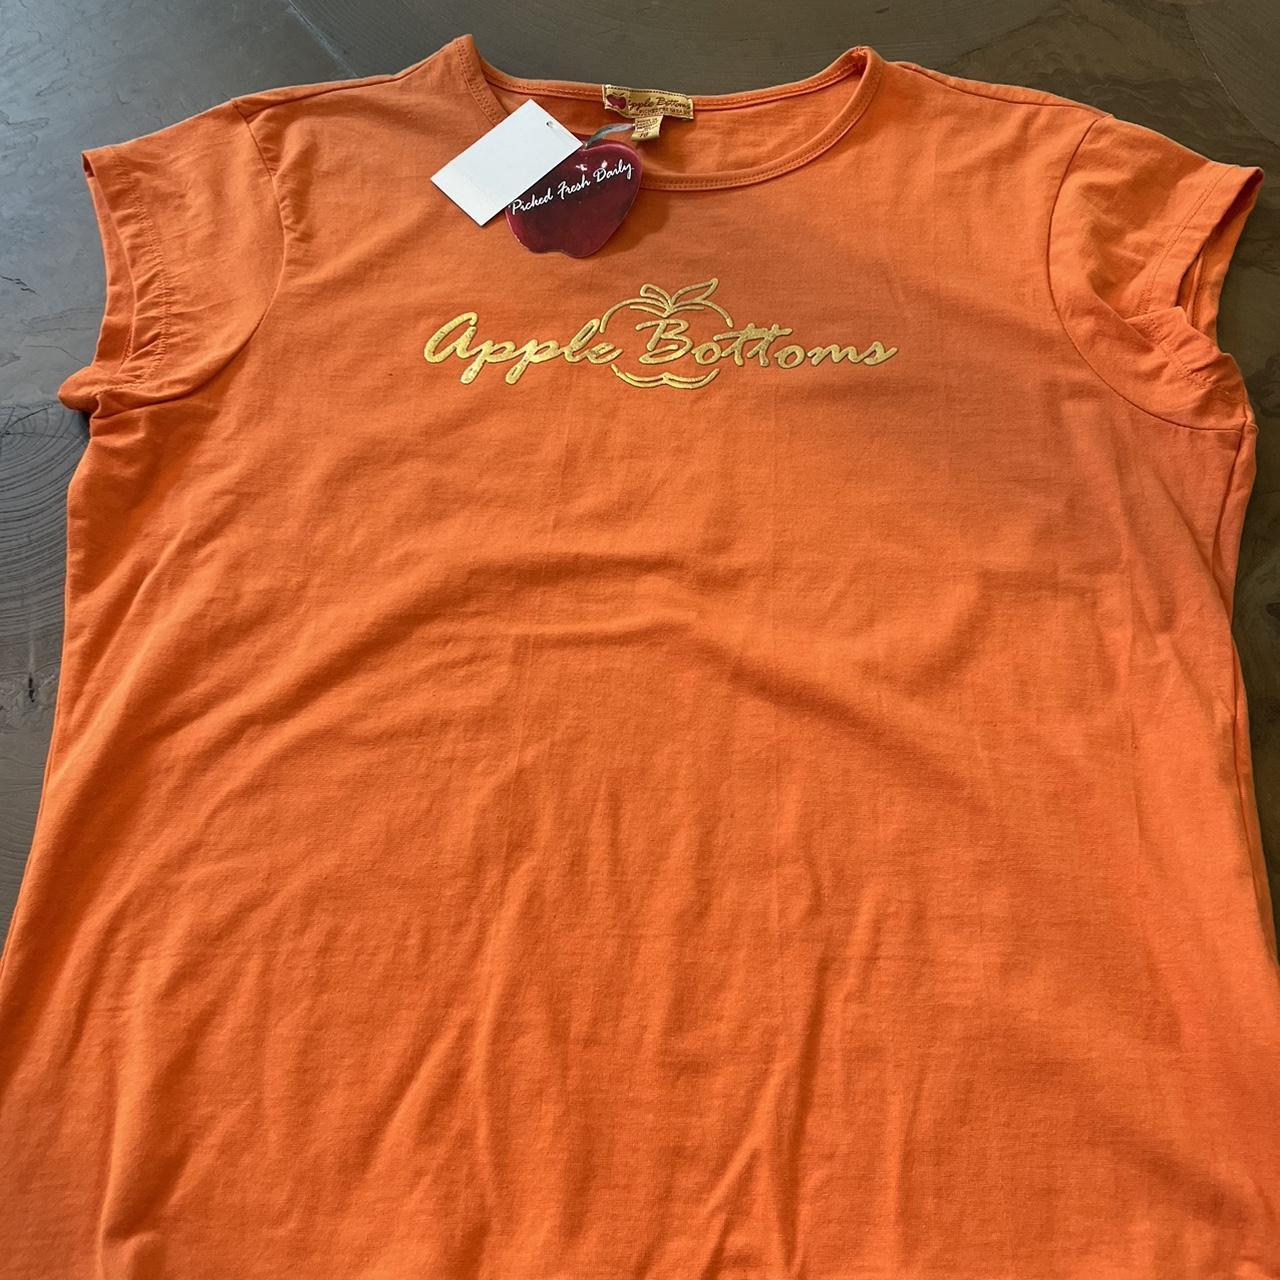 Apple Bottoms Women's Orange T-shirt (3)